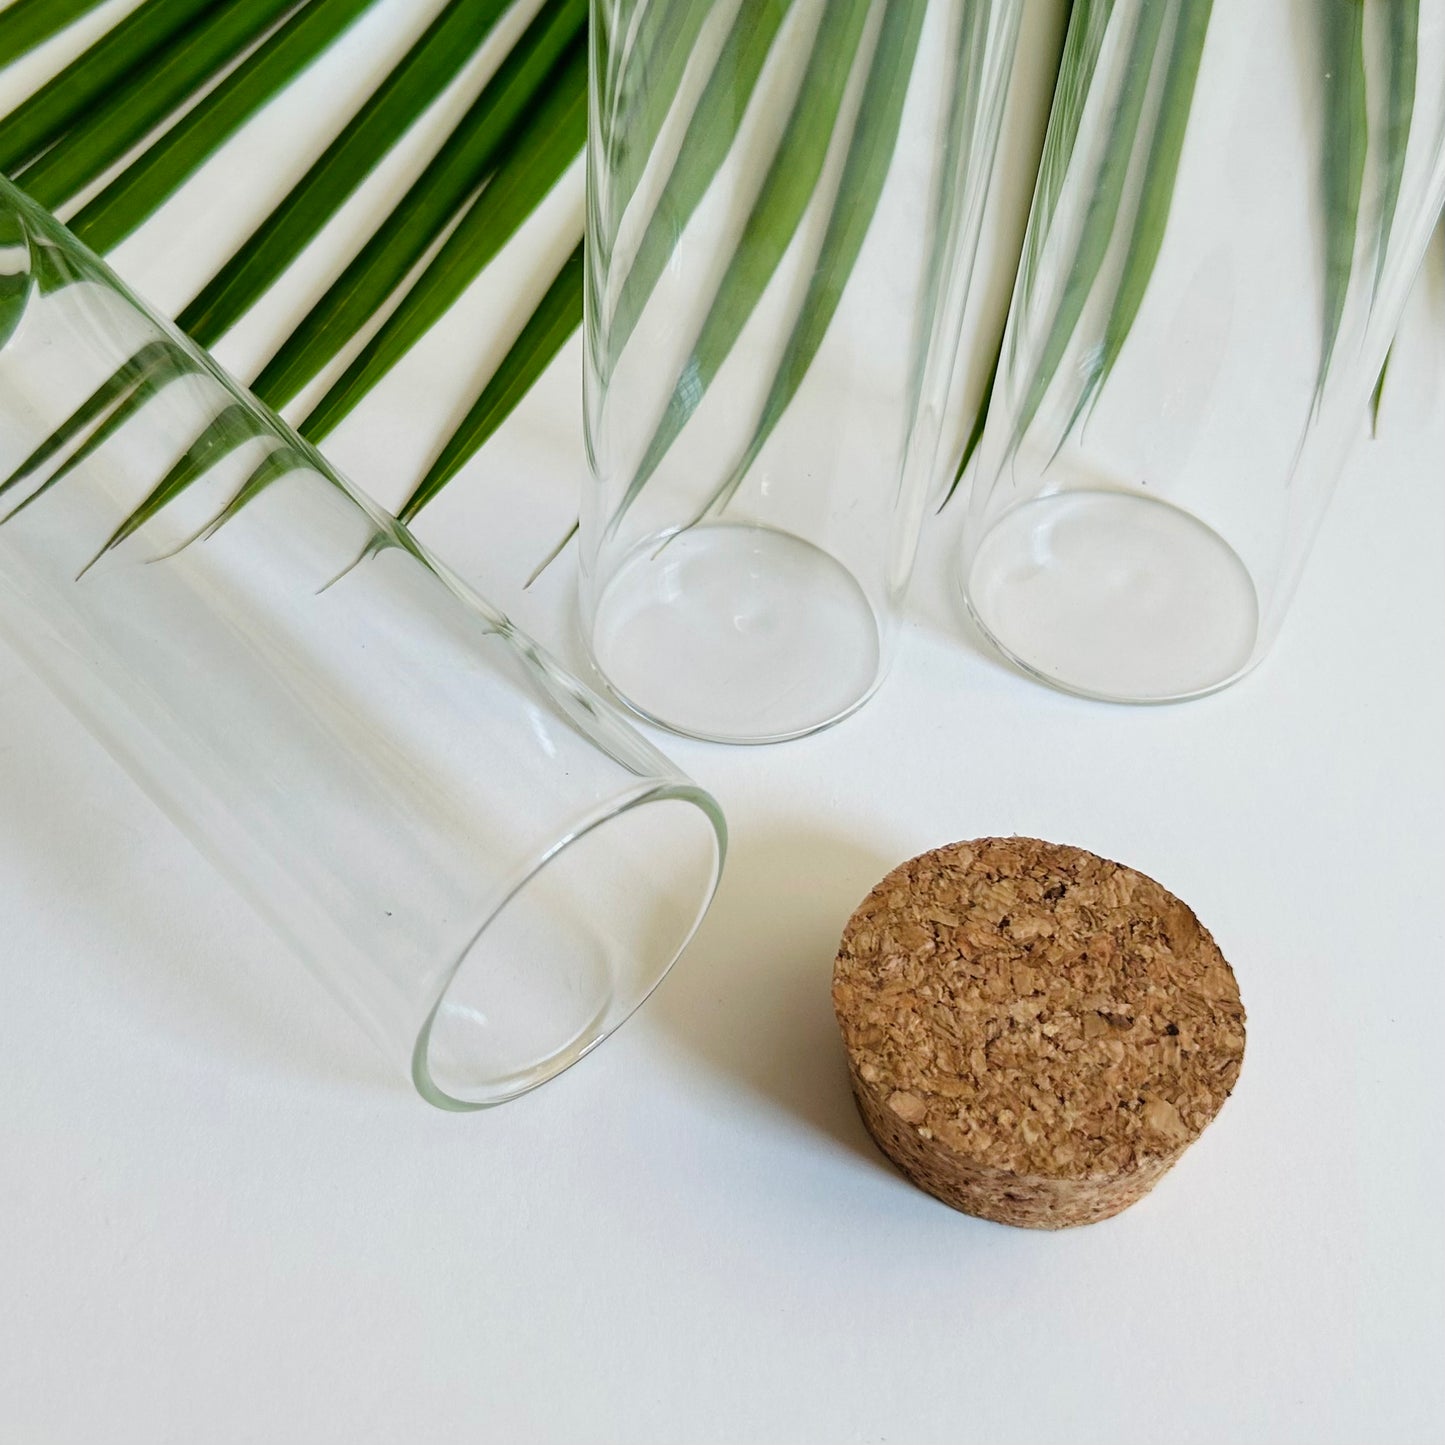 4 oz. Cylinder Glass Jar with cork